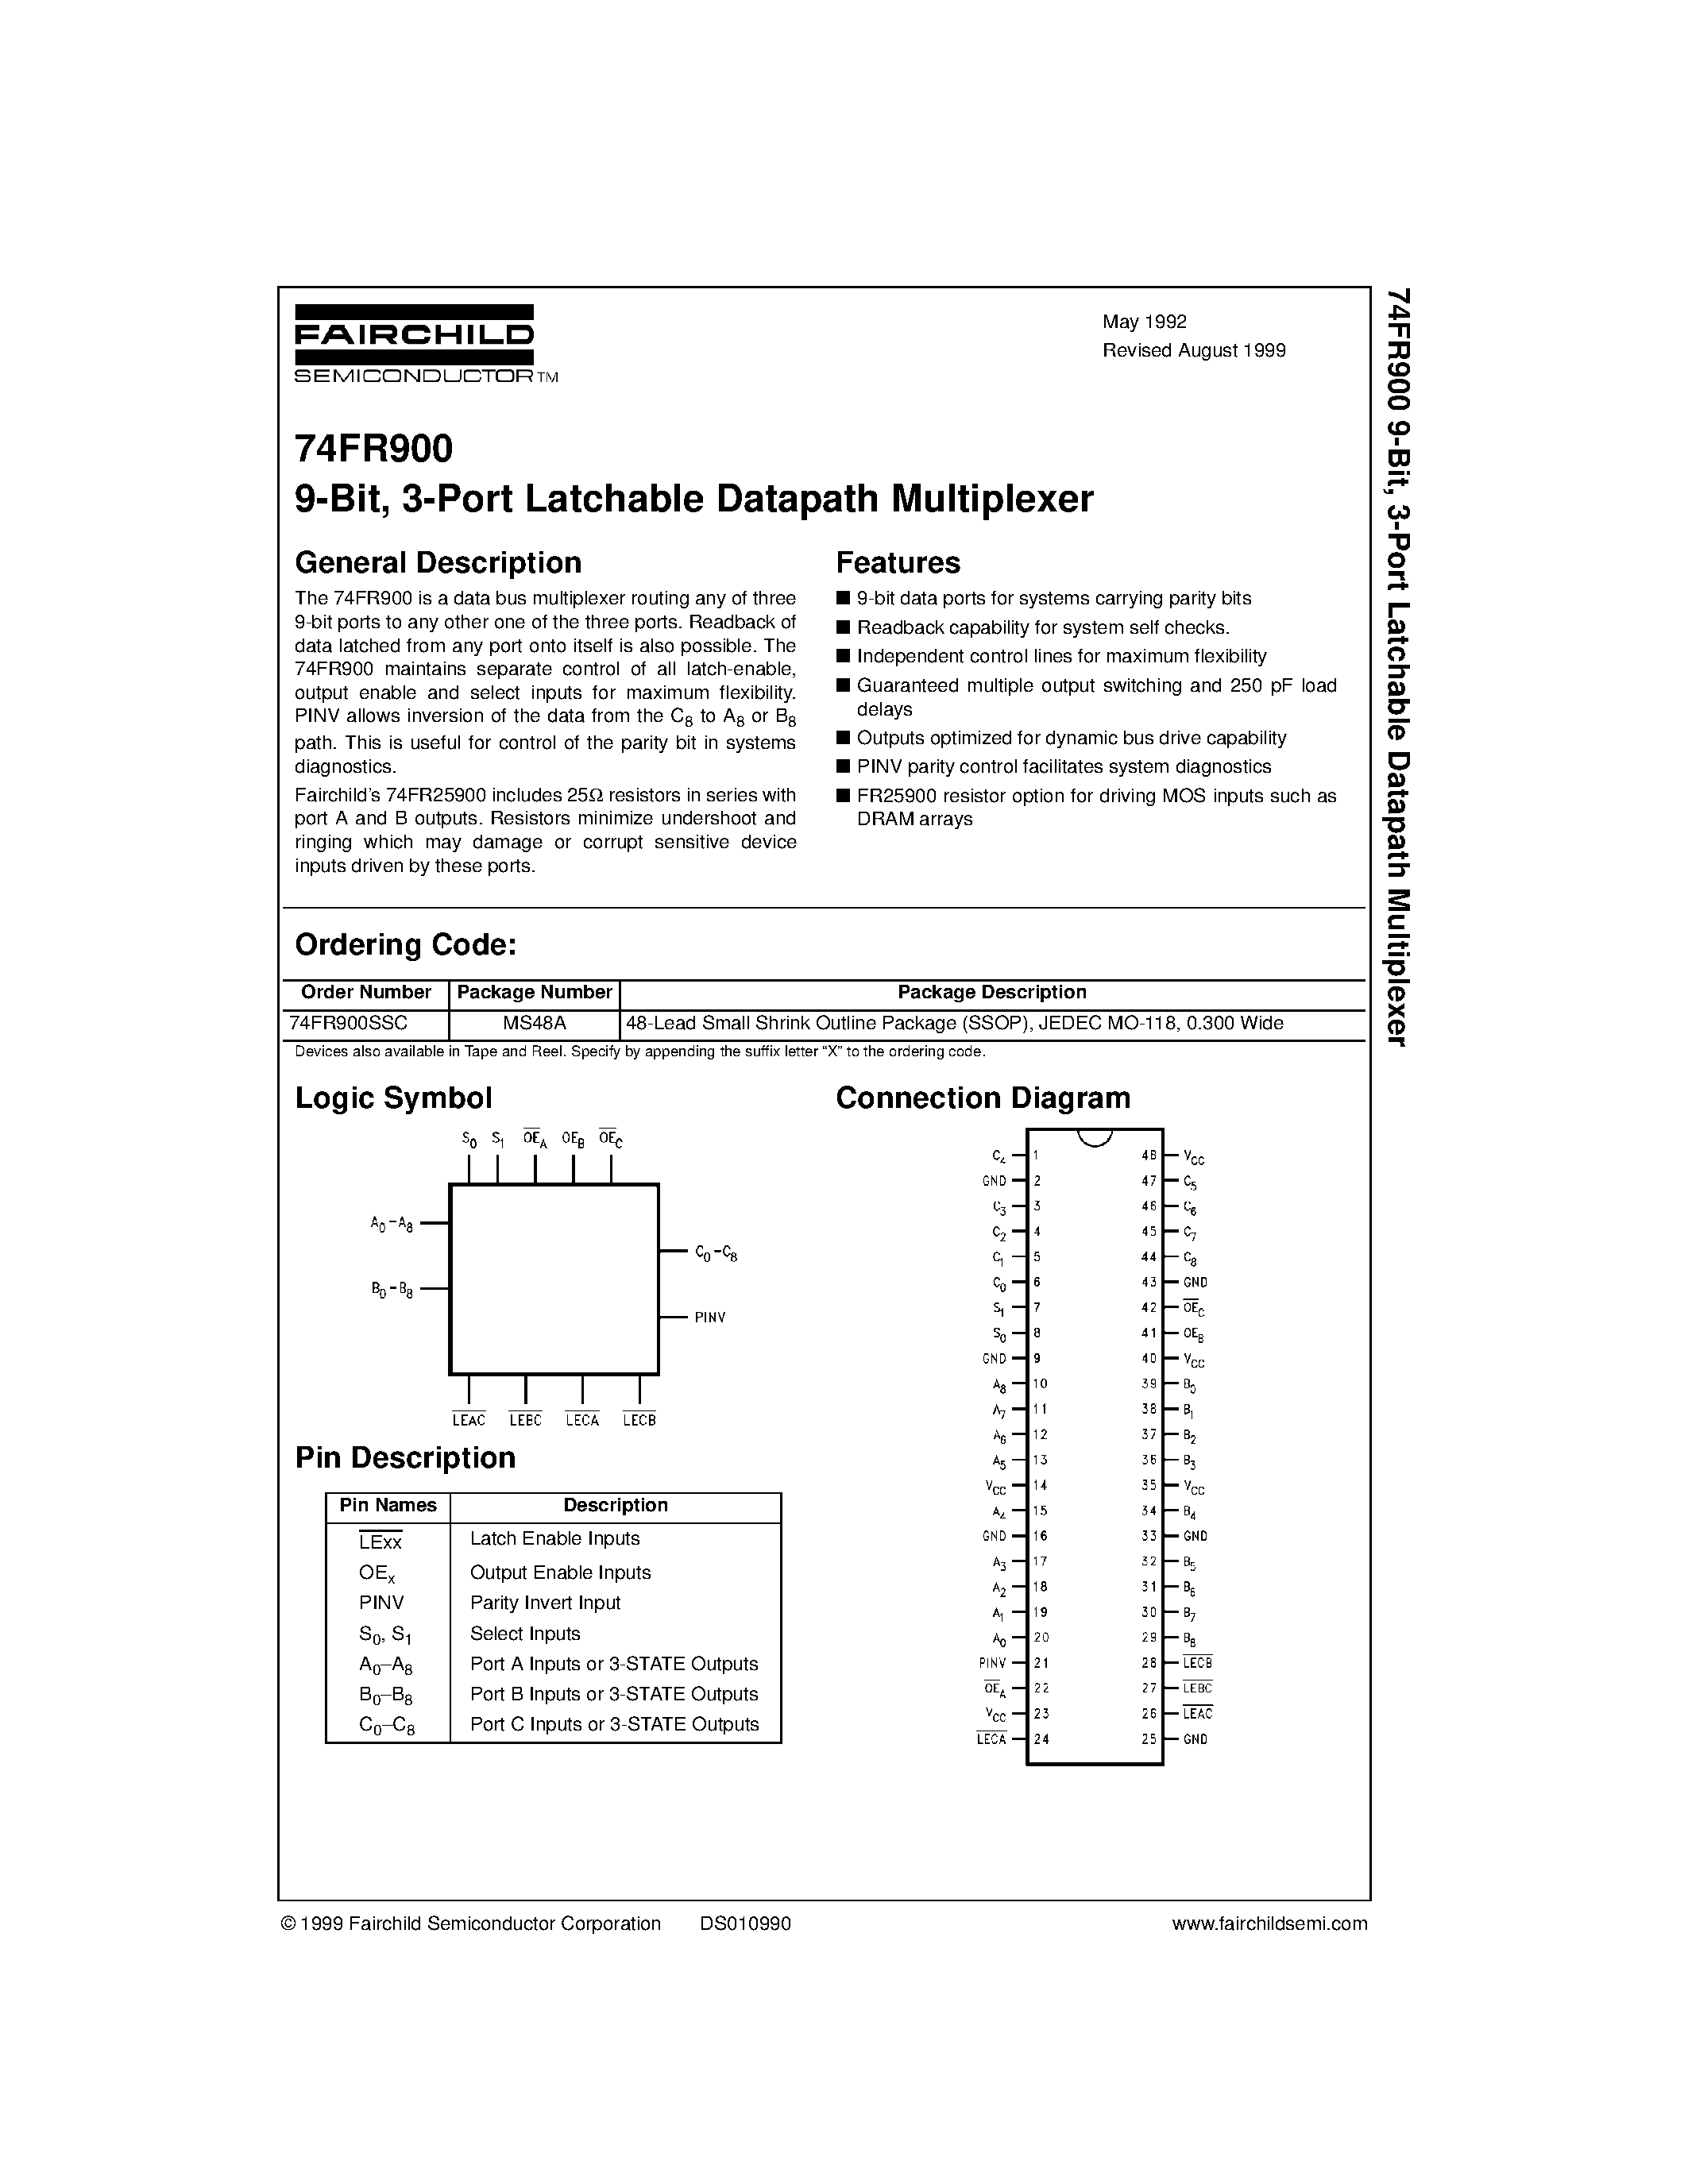 Datasheet 74FR900SSC - 9-Bit / 3-Port Latchable Datapath Multiplexer page 1